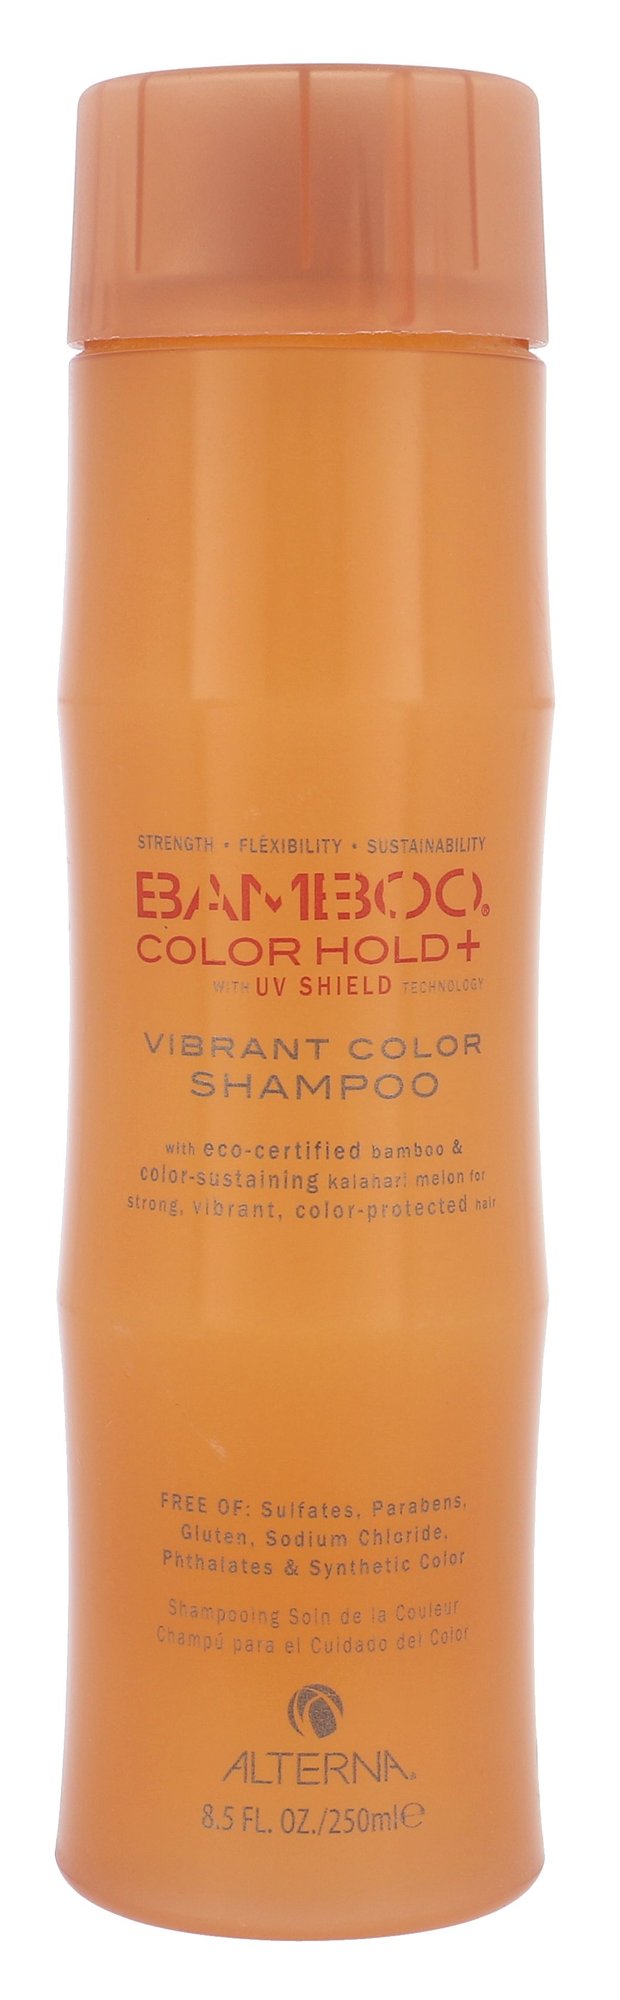 Alterna Bamboo Color Hold+ Vibrant Color šampūnas